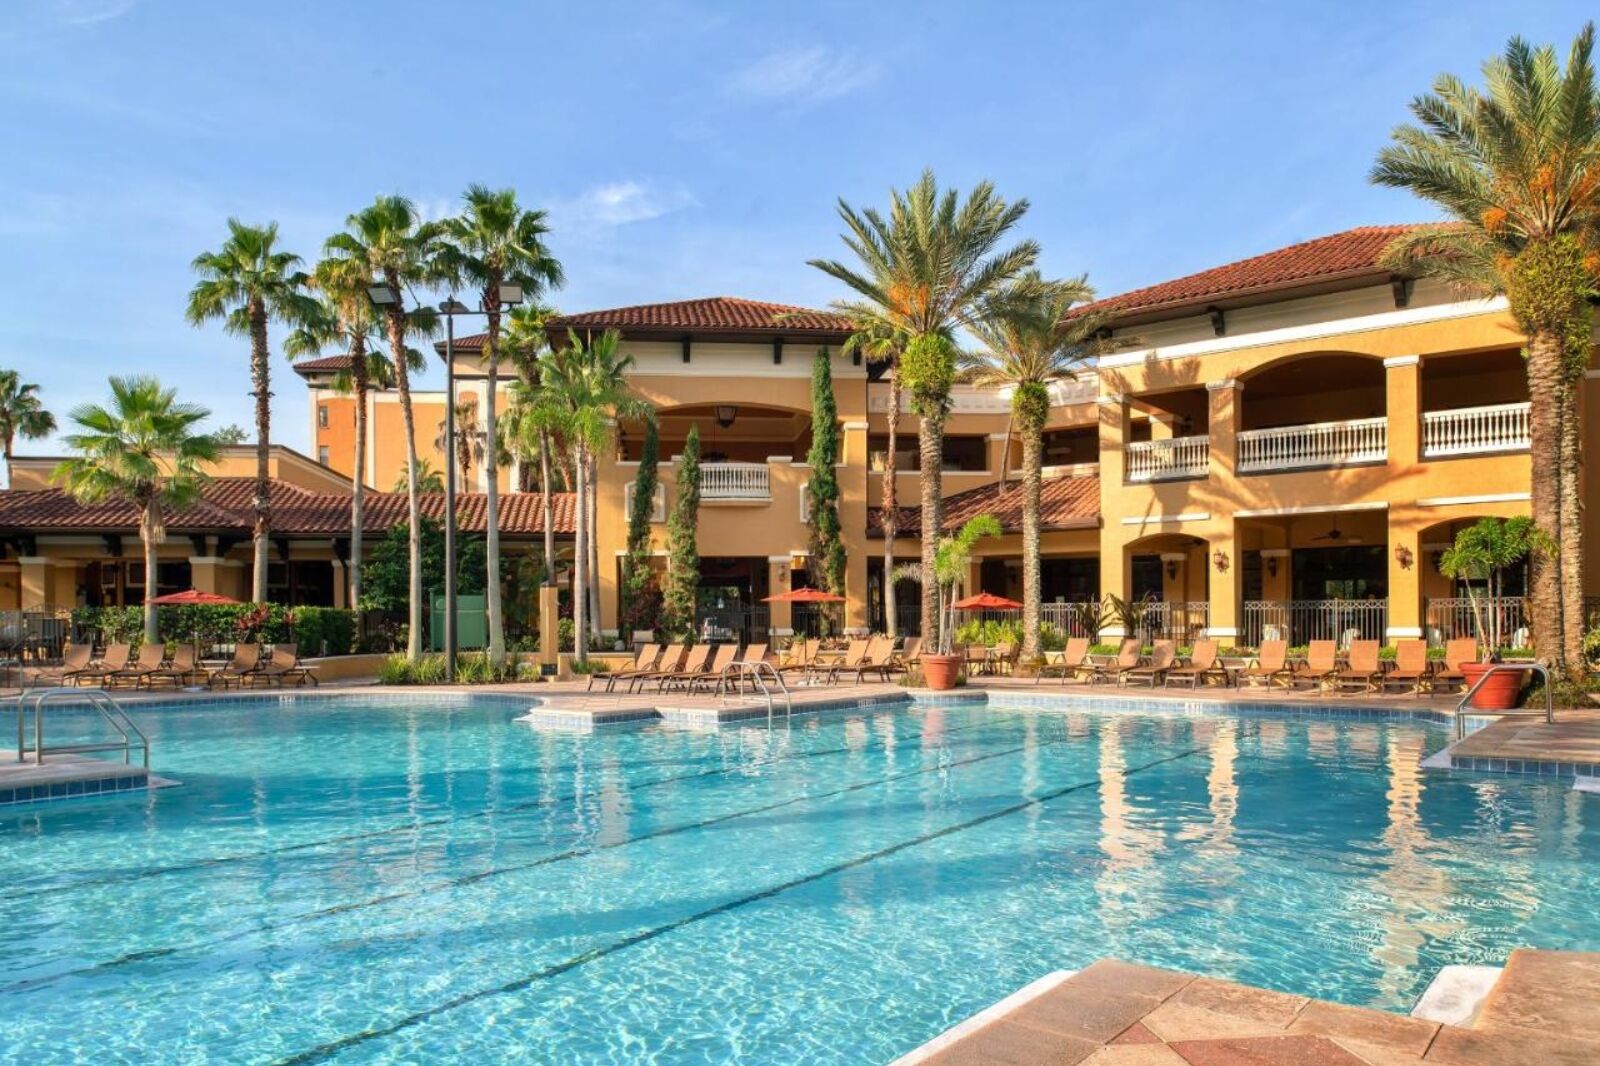 Pool at Floridays Resort Orlando one of the best Orlando resorts